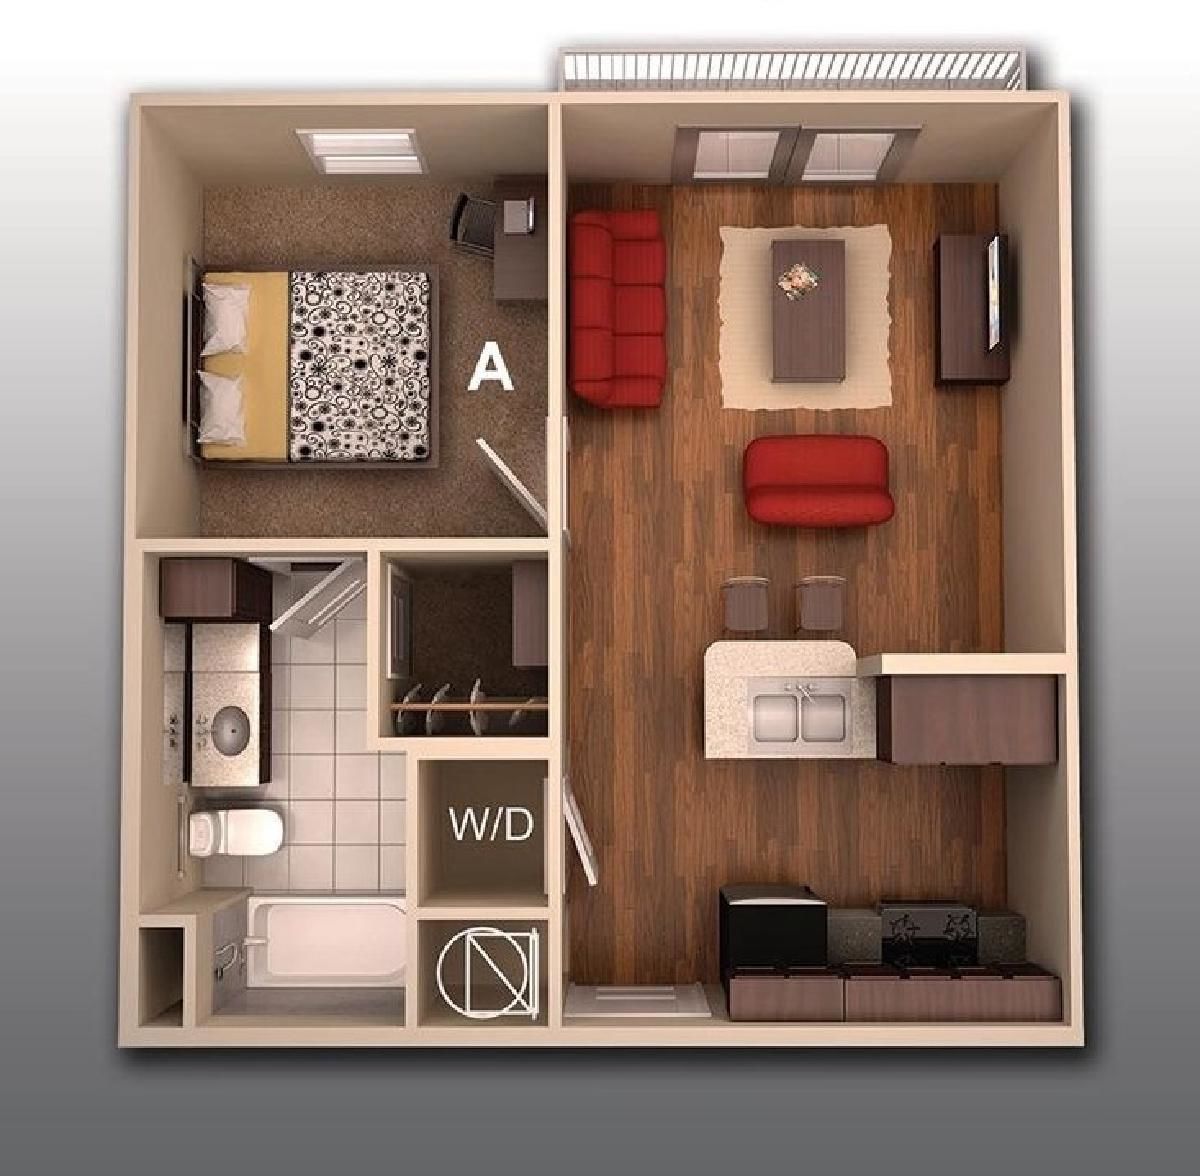 Two bedroom flat. Планировка квартиры. Планировка маленькой квартиры. Квартира студия планировка. Проект однокомнатного домика.